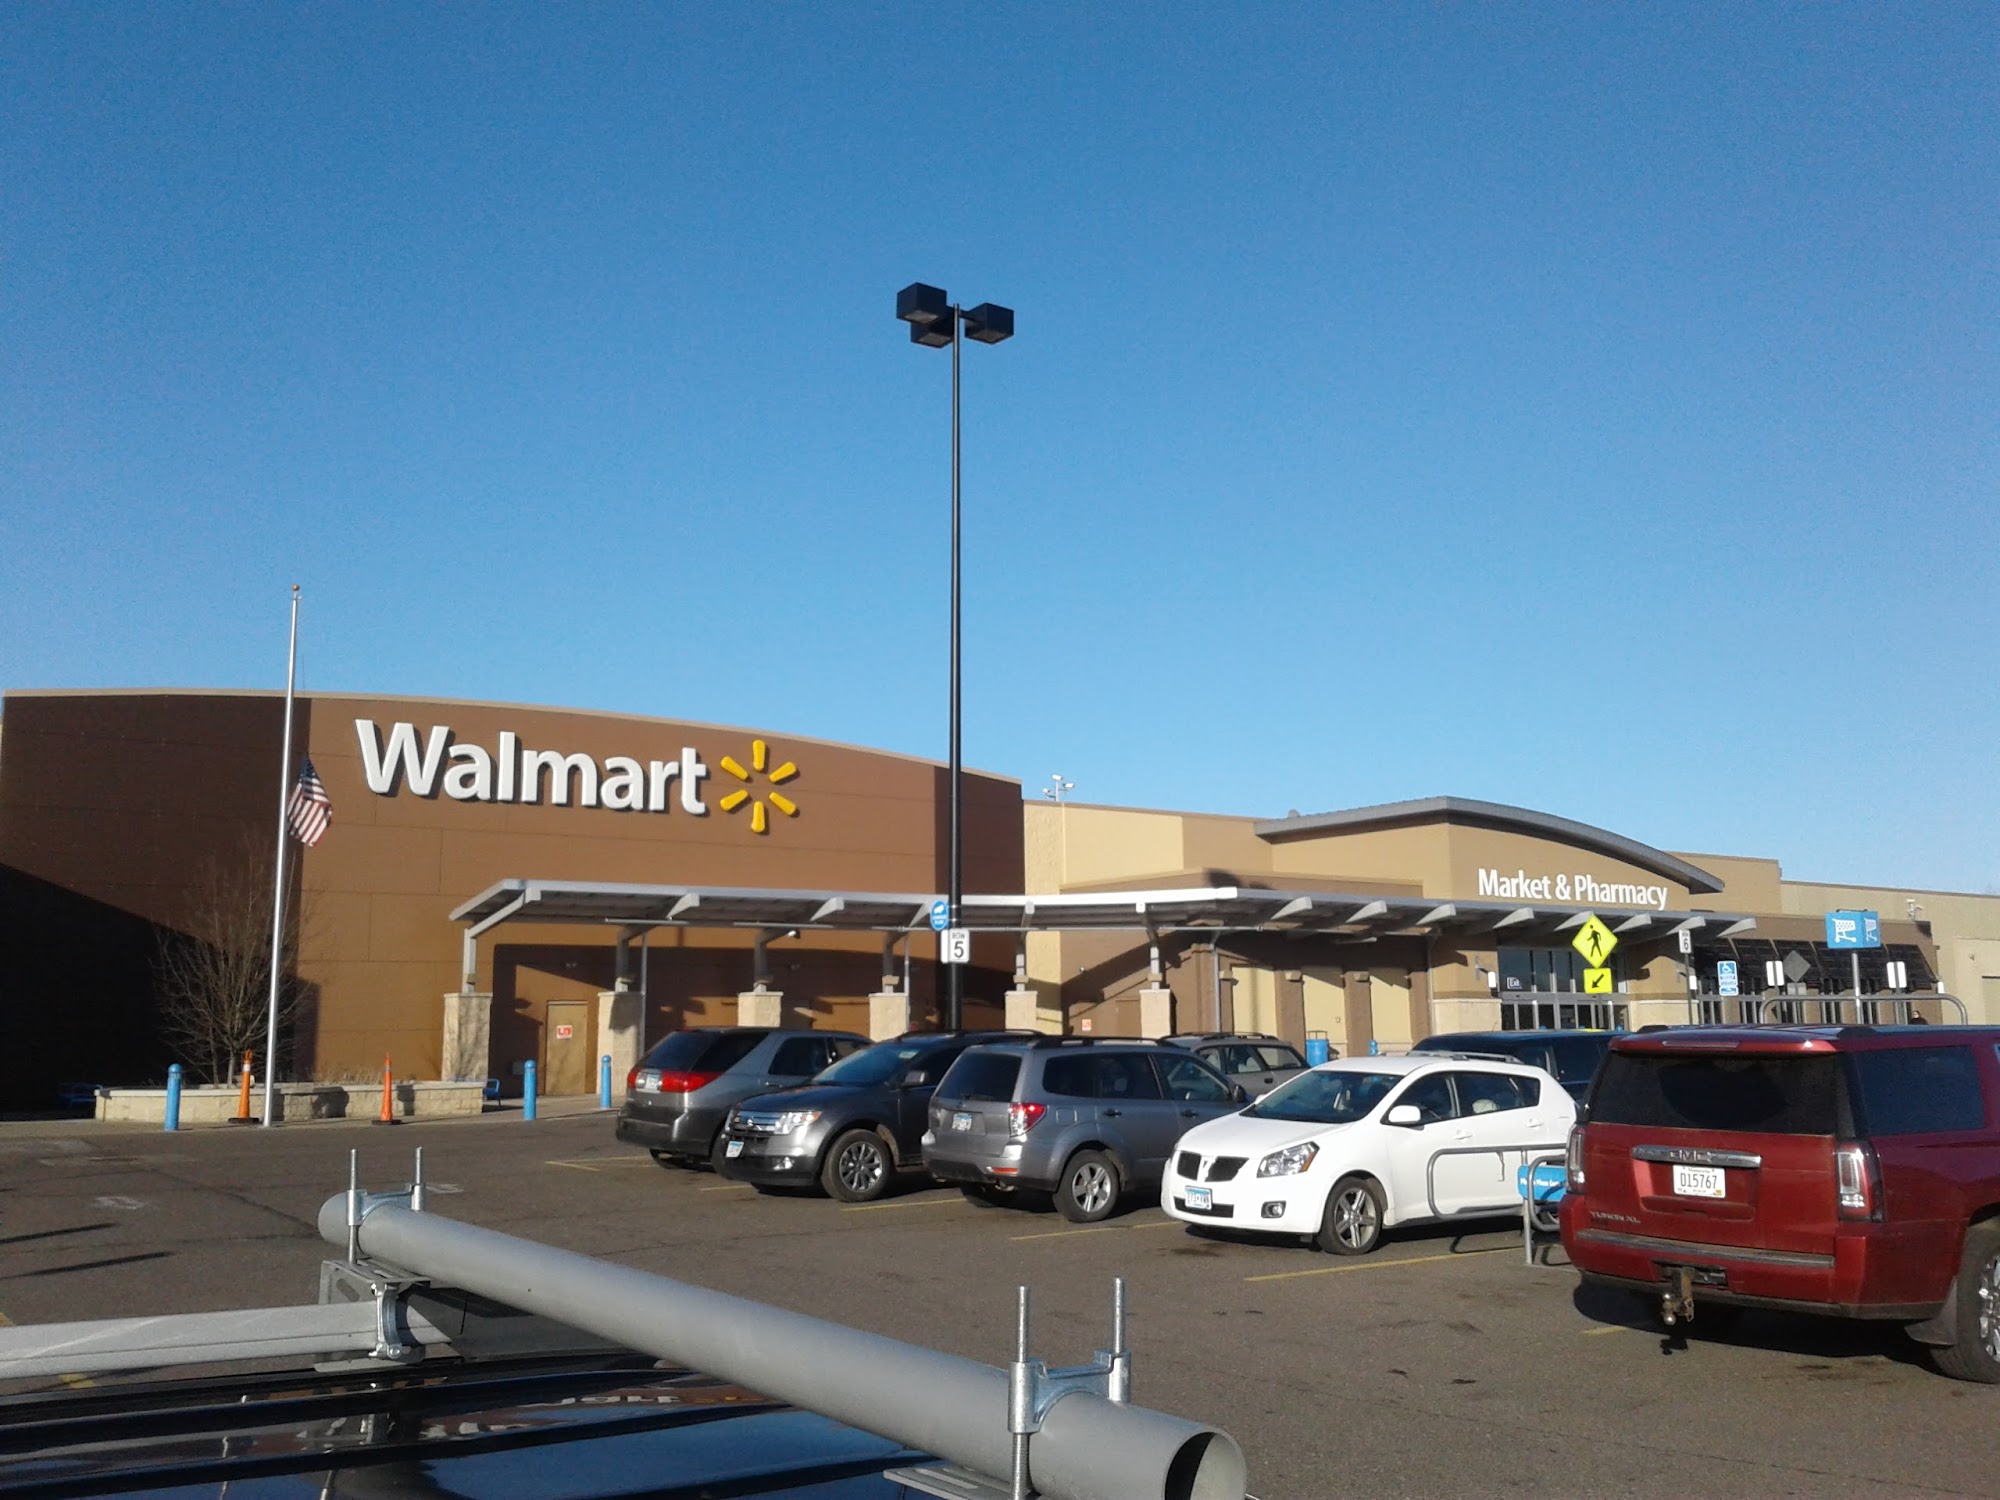 Walmart Vision & Glasses 4740 Mall Dr, Hermantown Minnesota 55811